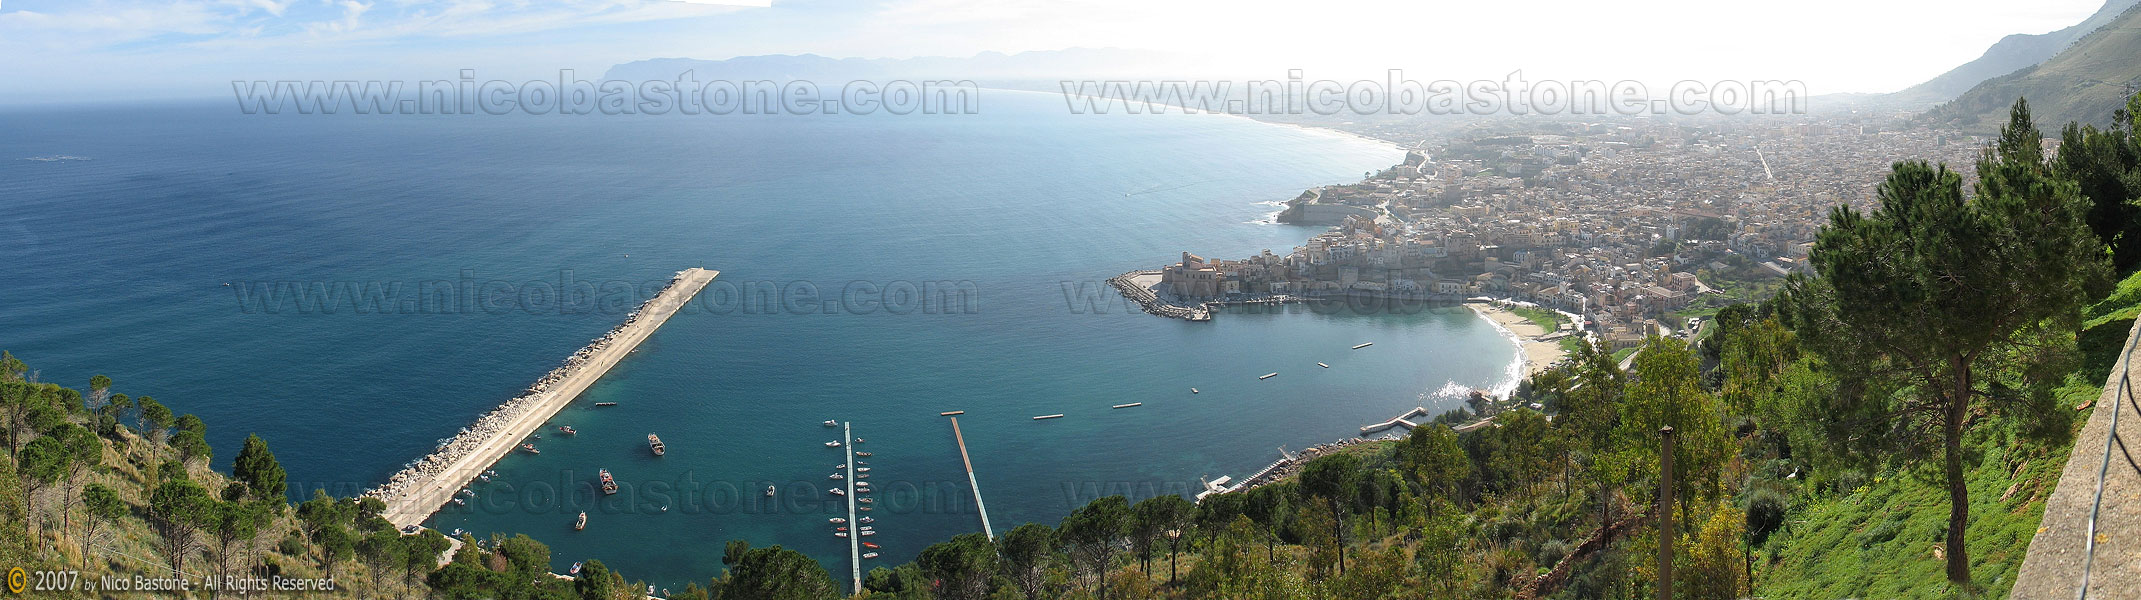 Castellammare del Golfo TP - Panorama - A large view - 2641x600